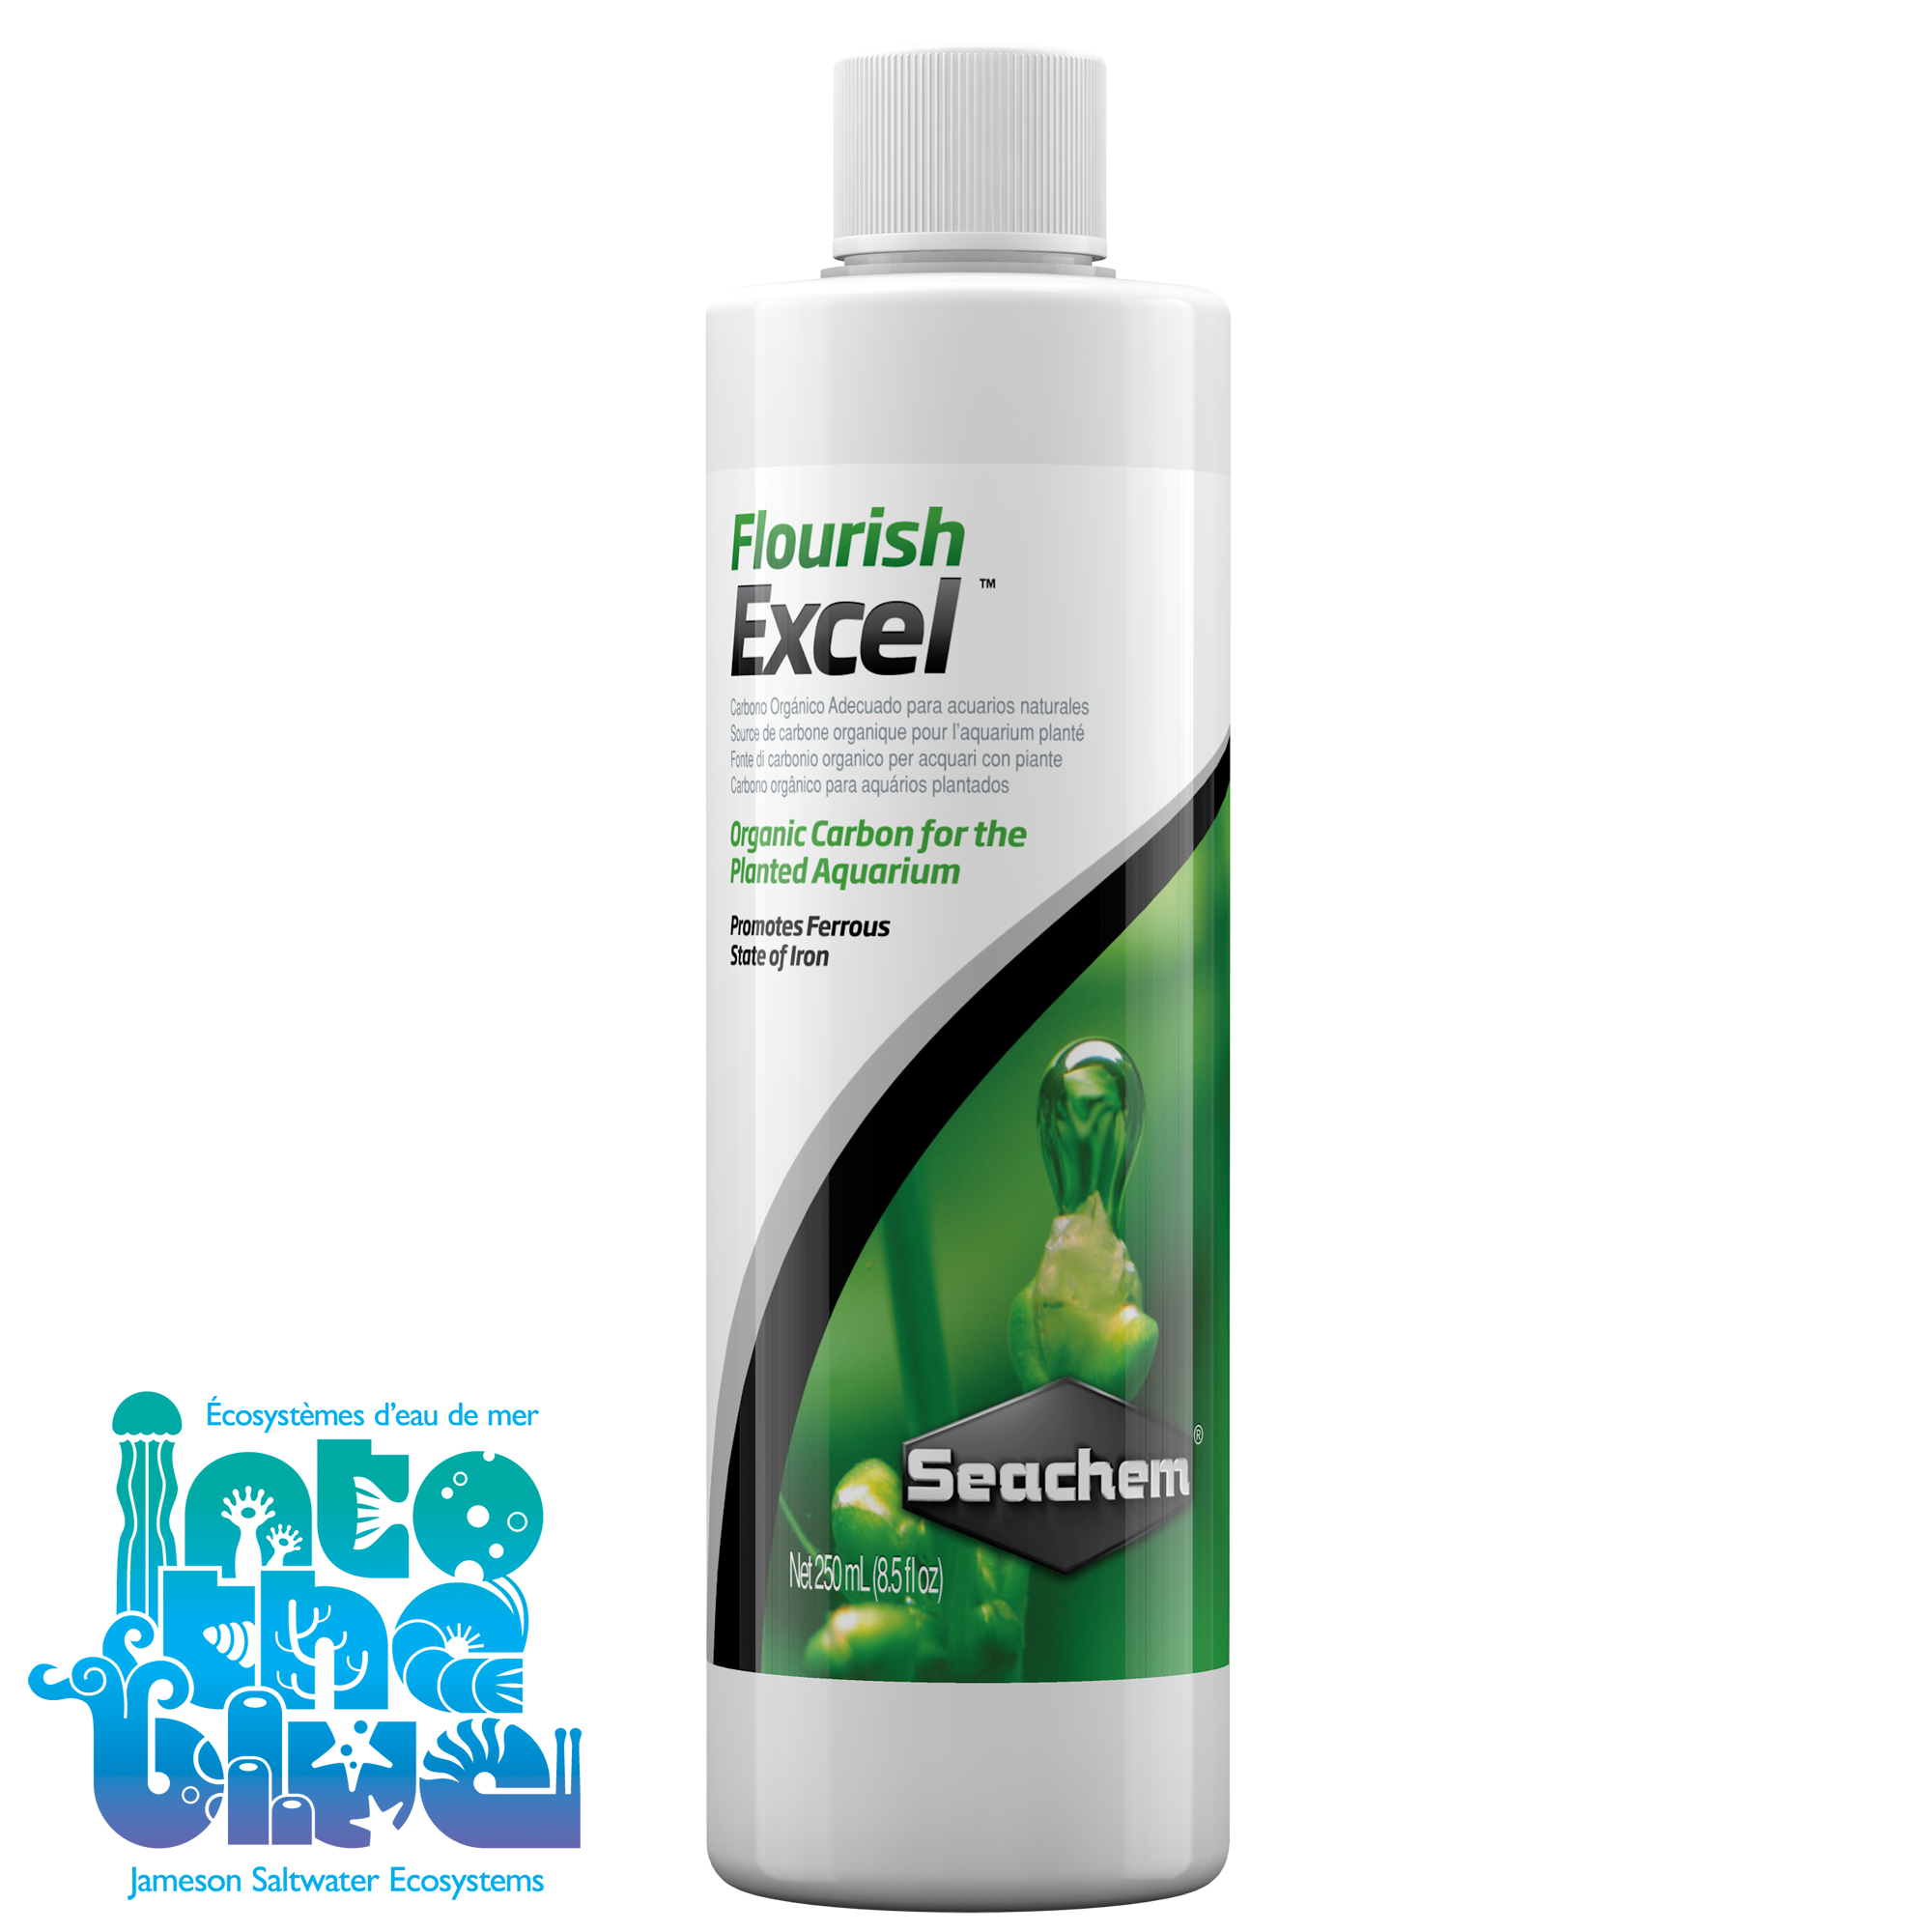 Seachem - Flourish Excel